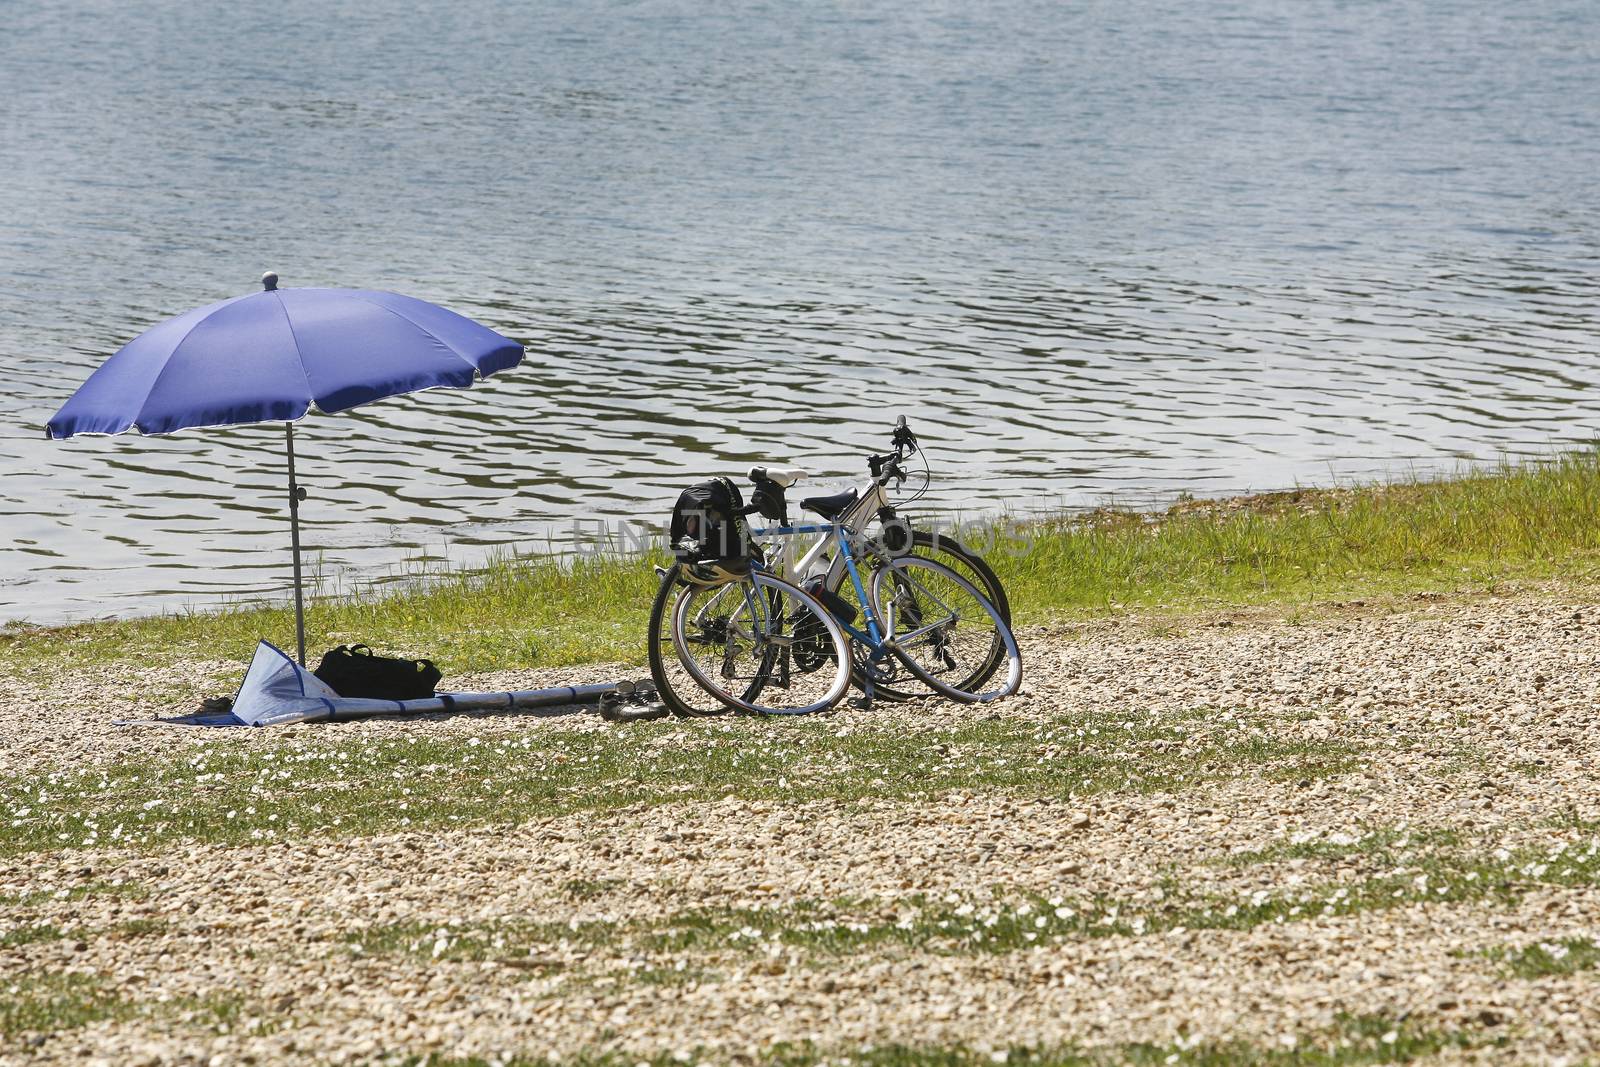 sunshade umbrella on lake Beach and two bicycle